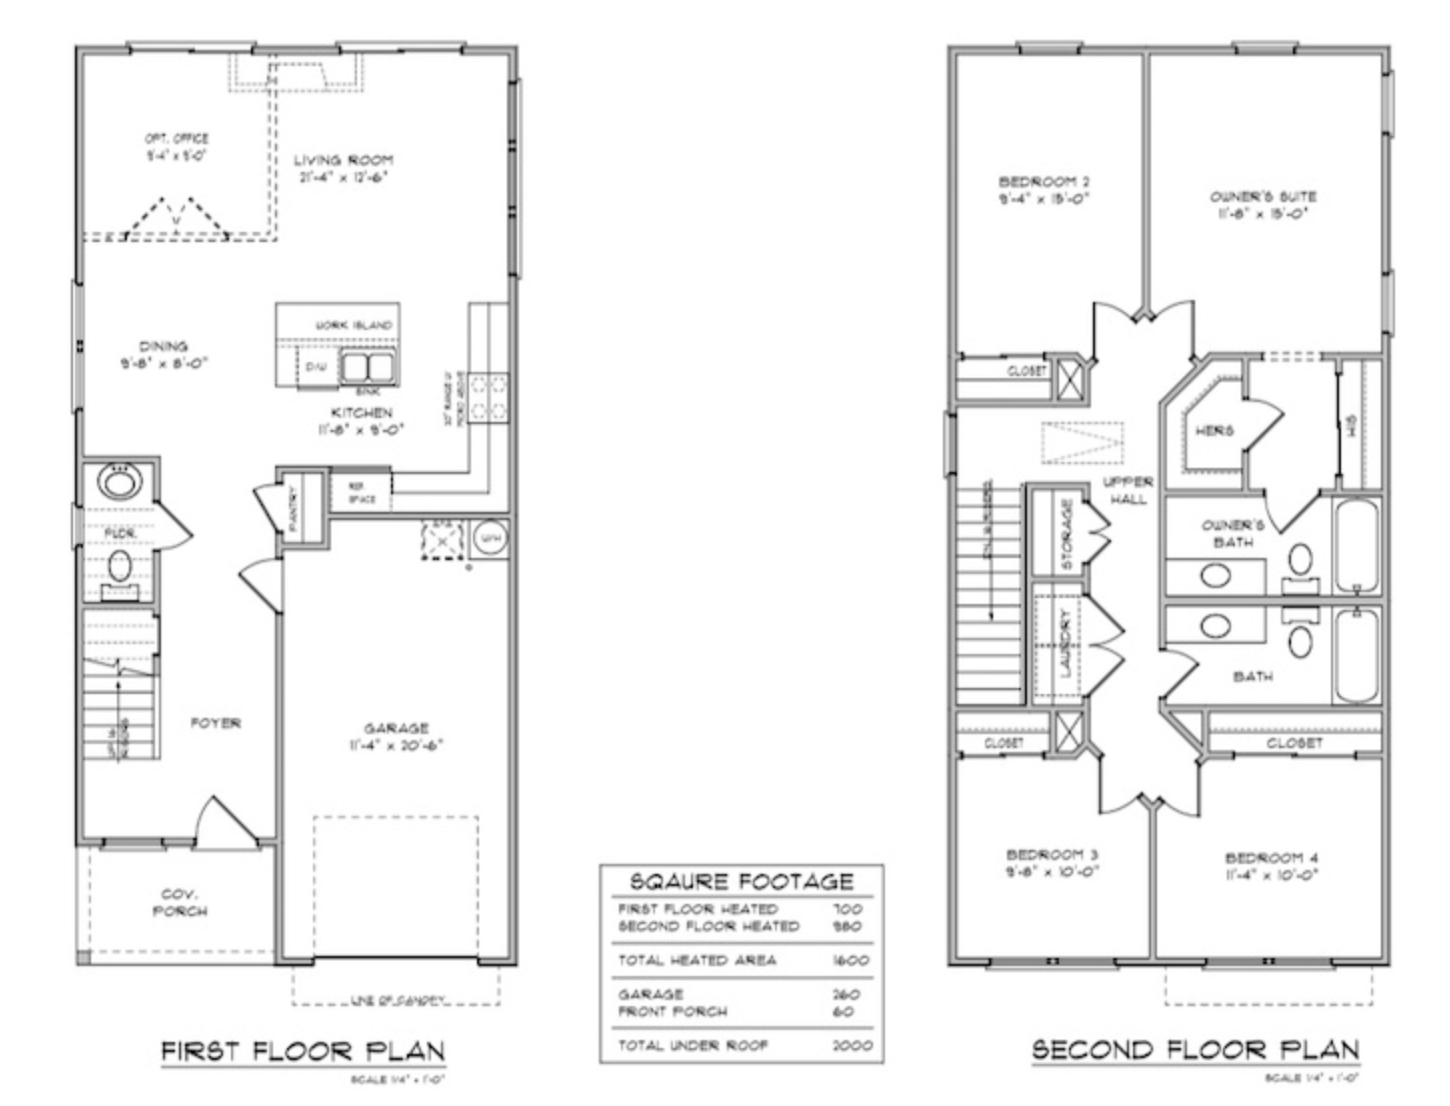 The Skylark B floor plan image